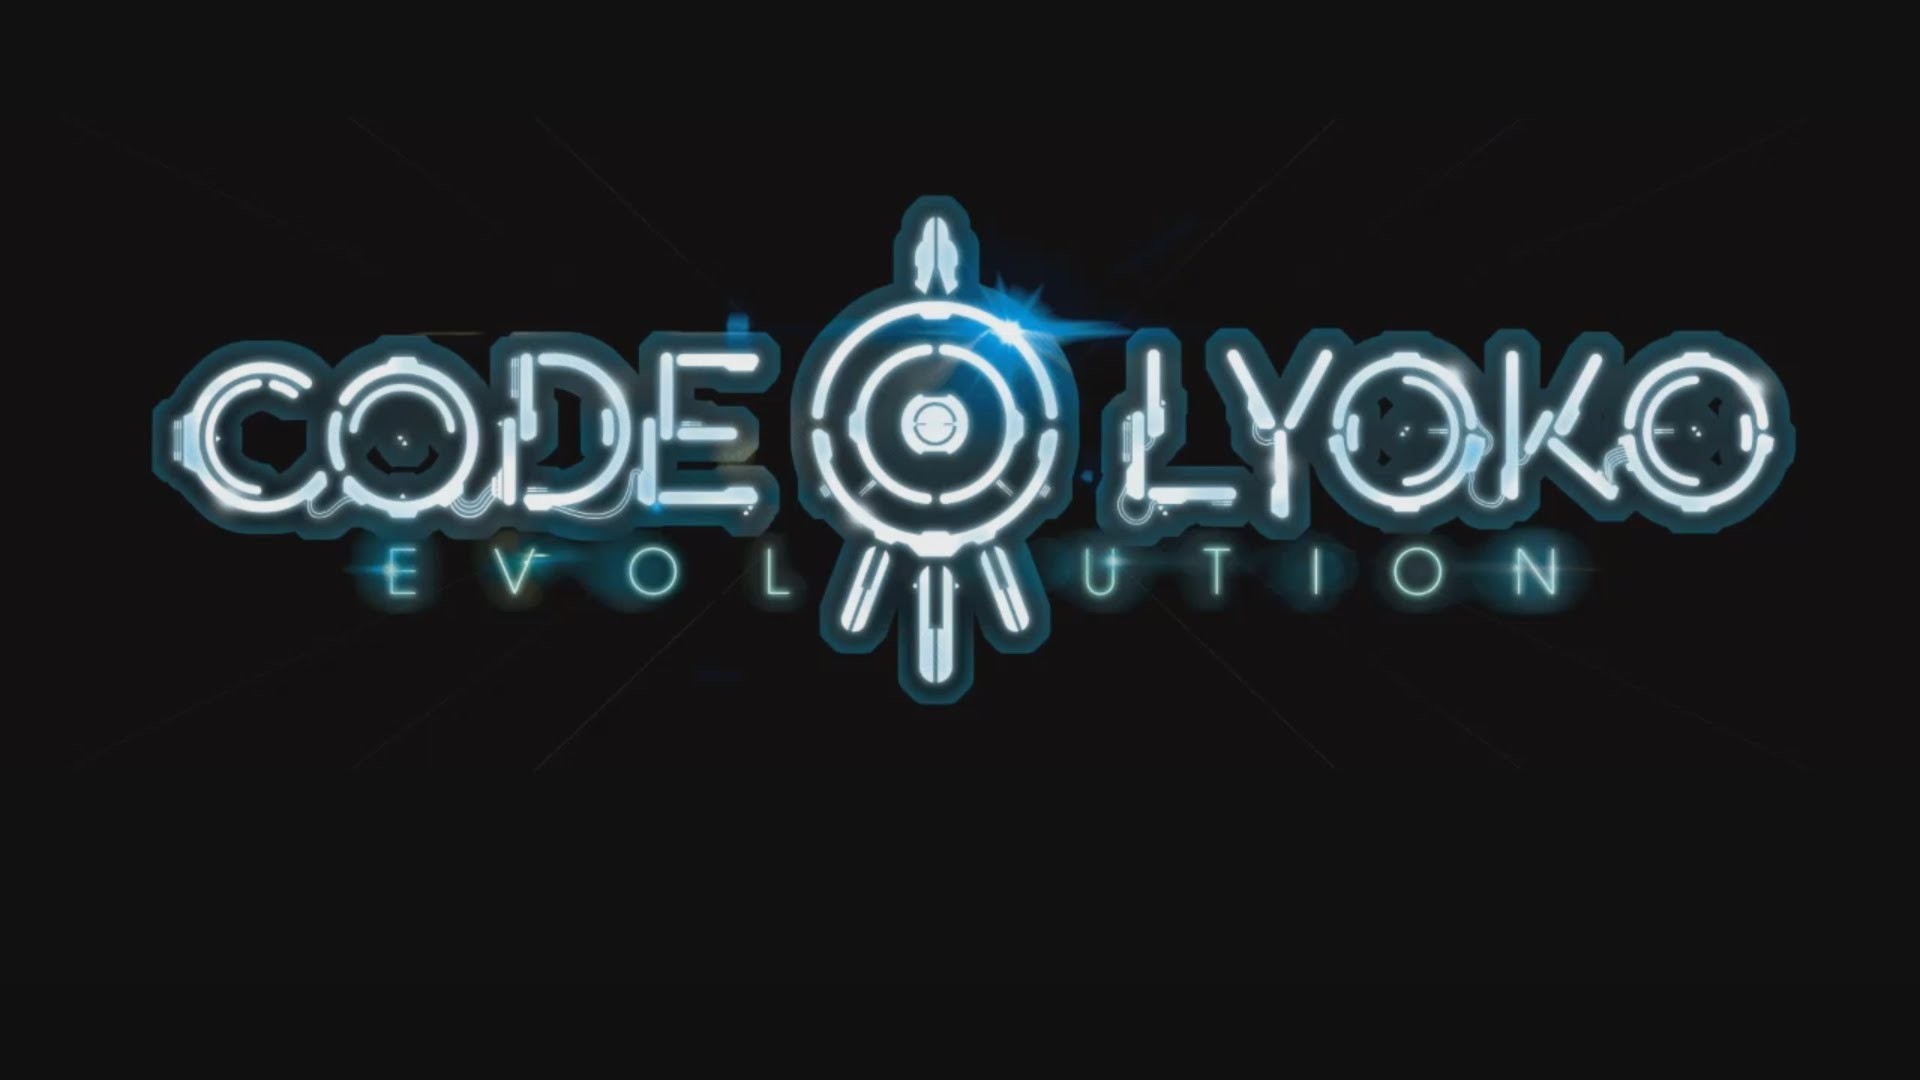 1920x1080 Codelyoko.fr - Code Lyoko Evolution - Bande annonce [HD]